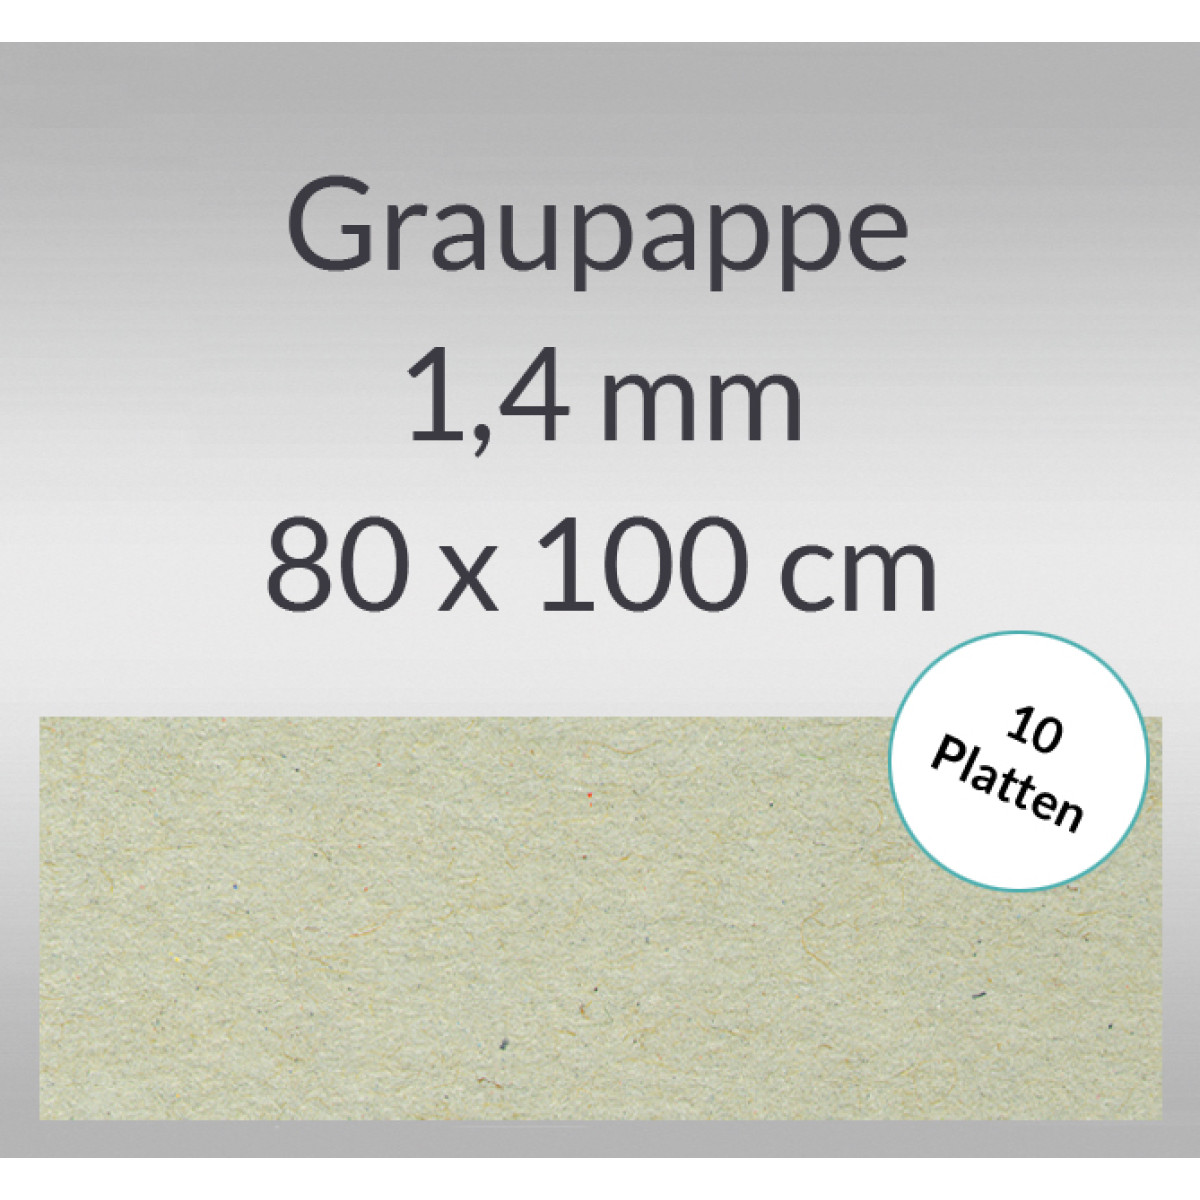 Graupappe 80 x 100 cm - 1,4 mm